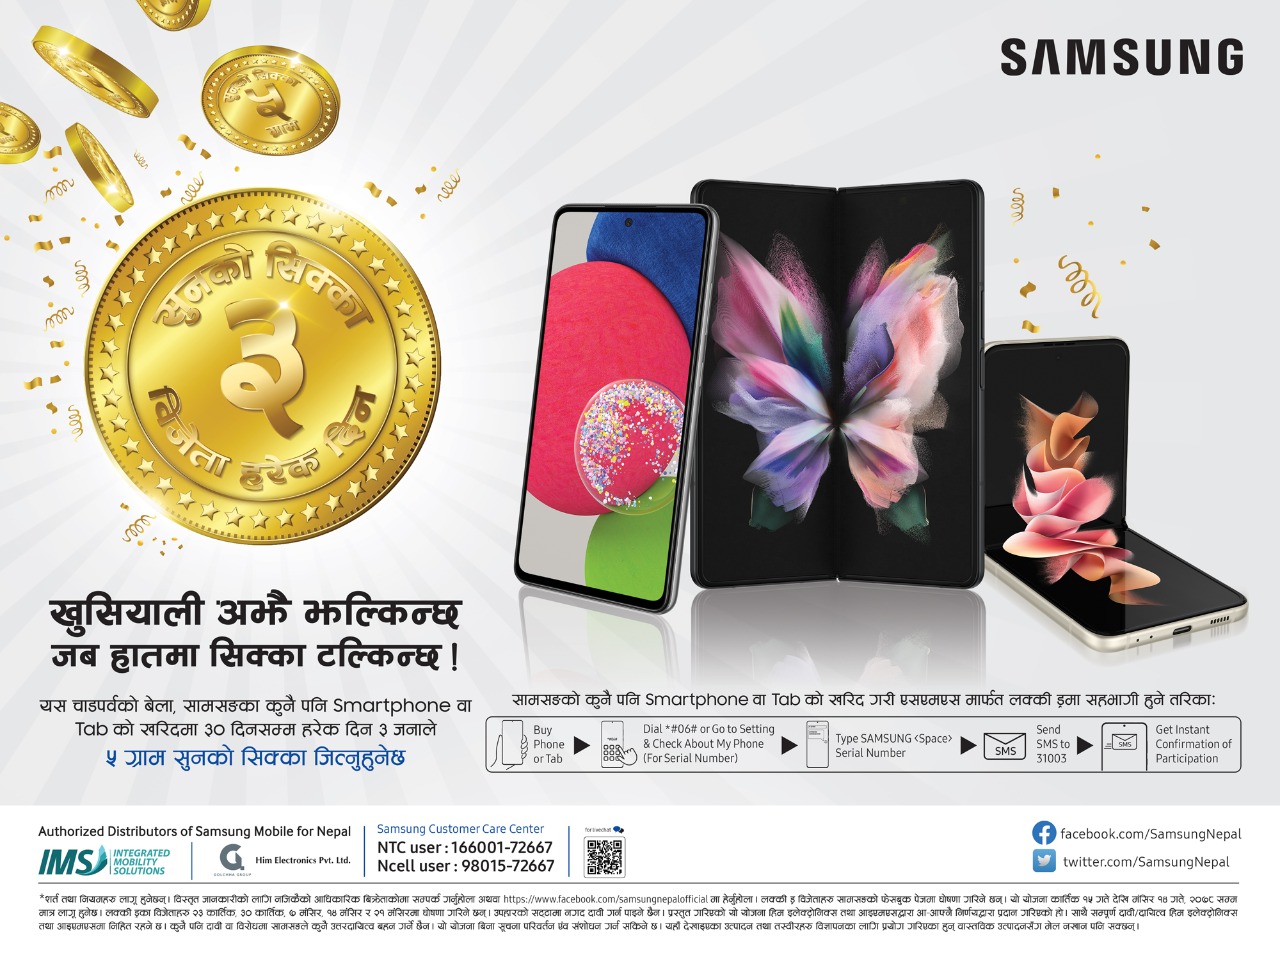 First lucky draw of Samsung’s ‘Khusiyali Ajhai Jhalkinchha, Jaba Haat Maa Sikka Talkinchha’ Offer concludes